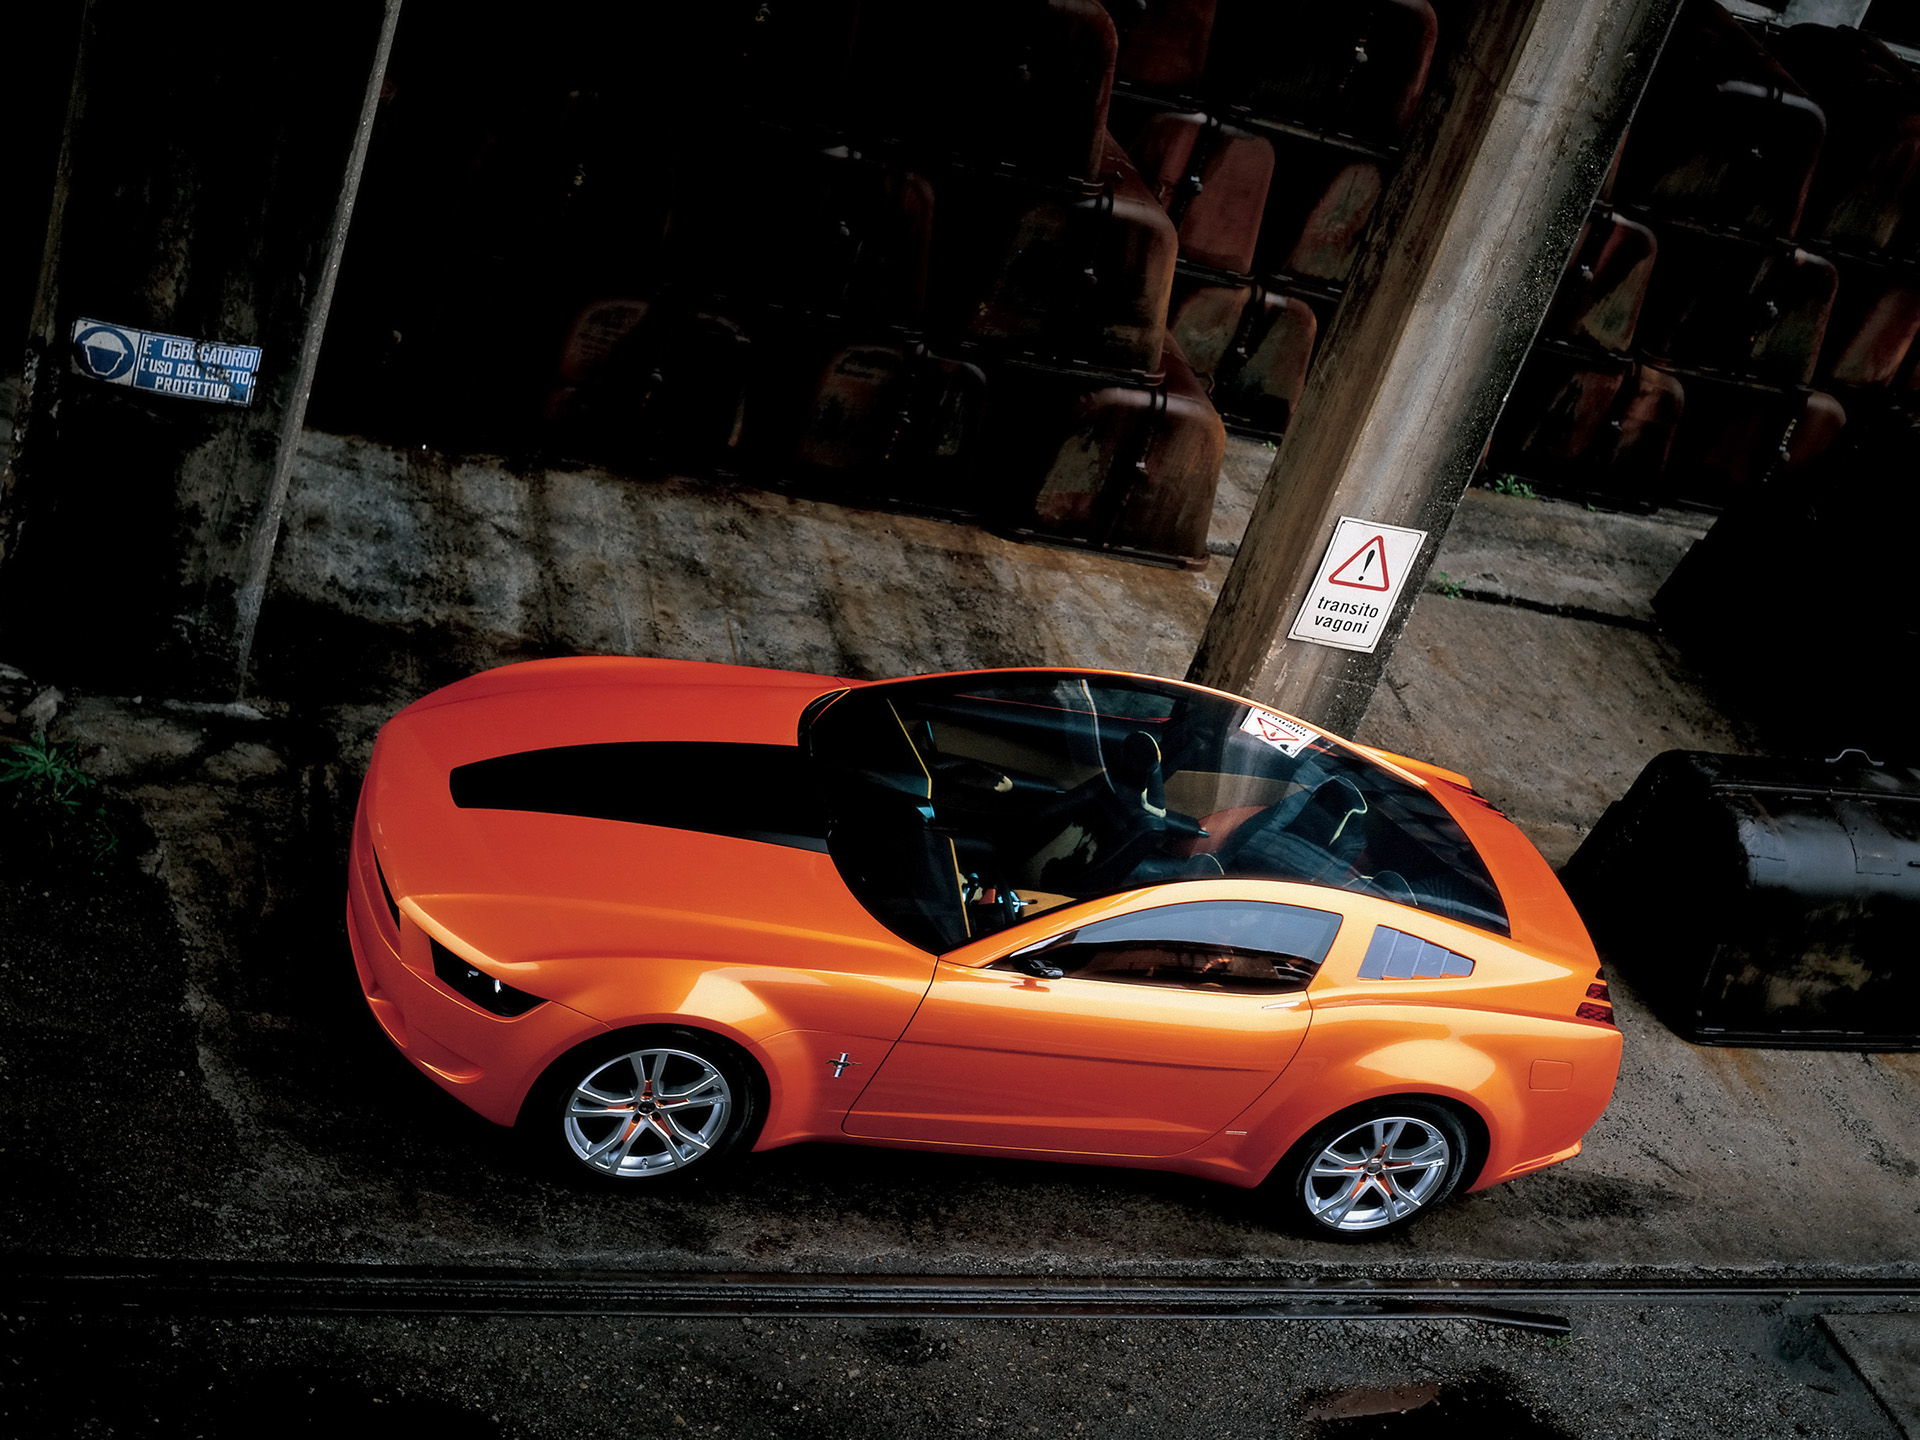  2006 Ford Mustang Giugiaro Concept Wallpaper.